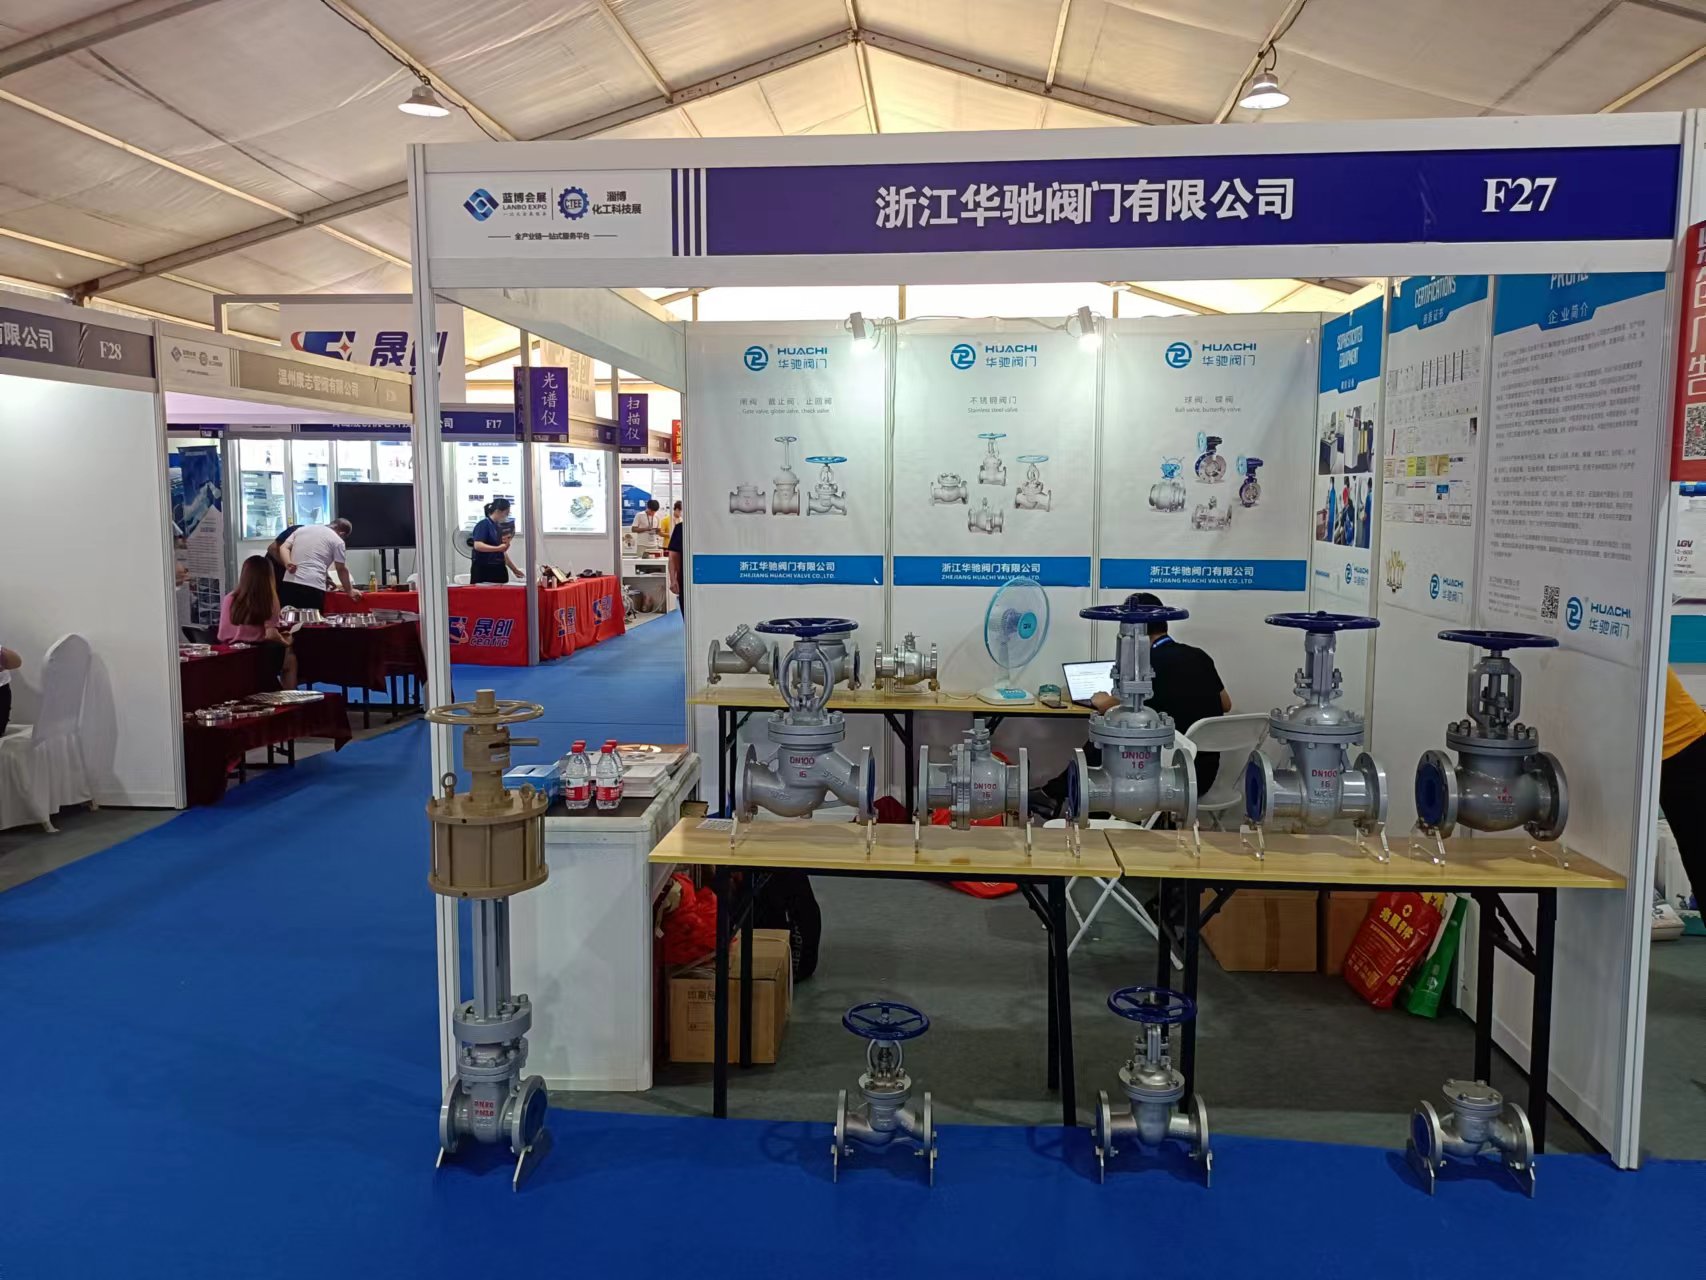 Zhejiang Huachi Valve Co., Ltd. osallistui Zibo Chemical Industry Exhibition 2022 China (Zibo) International Chemical Technology Expo -näyttelyyn